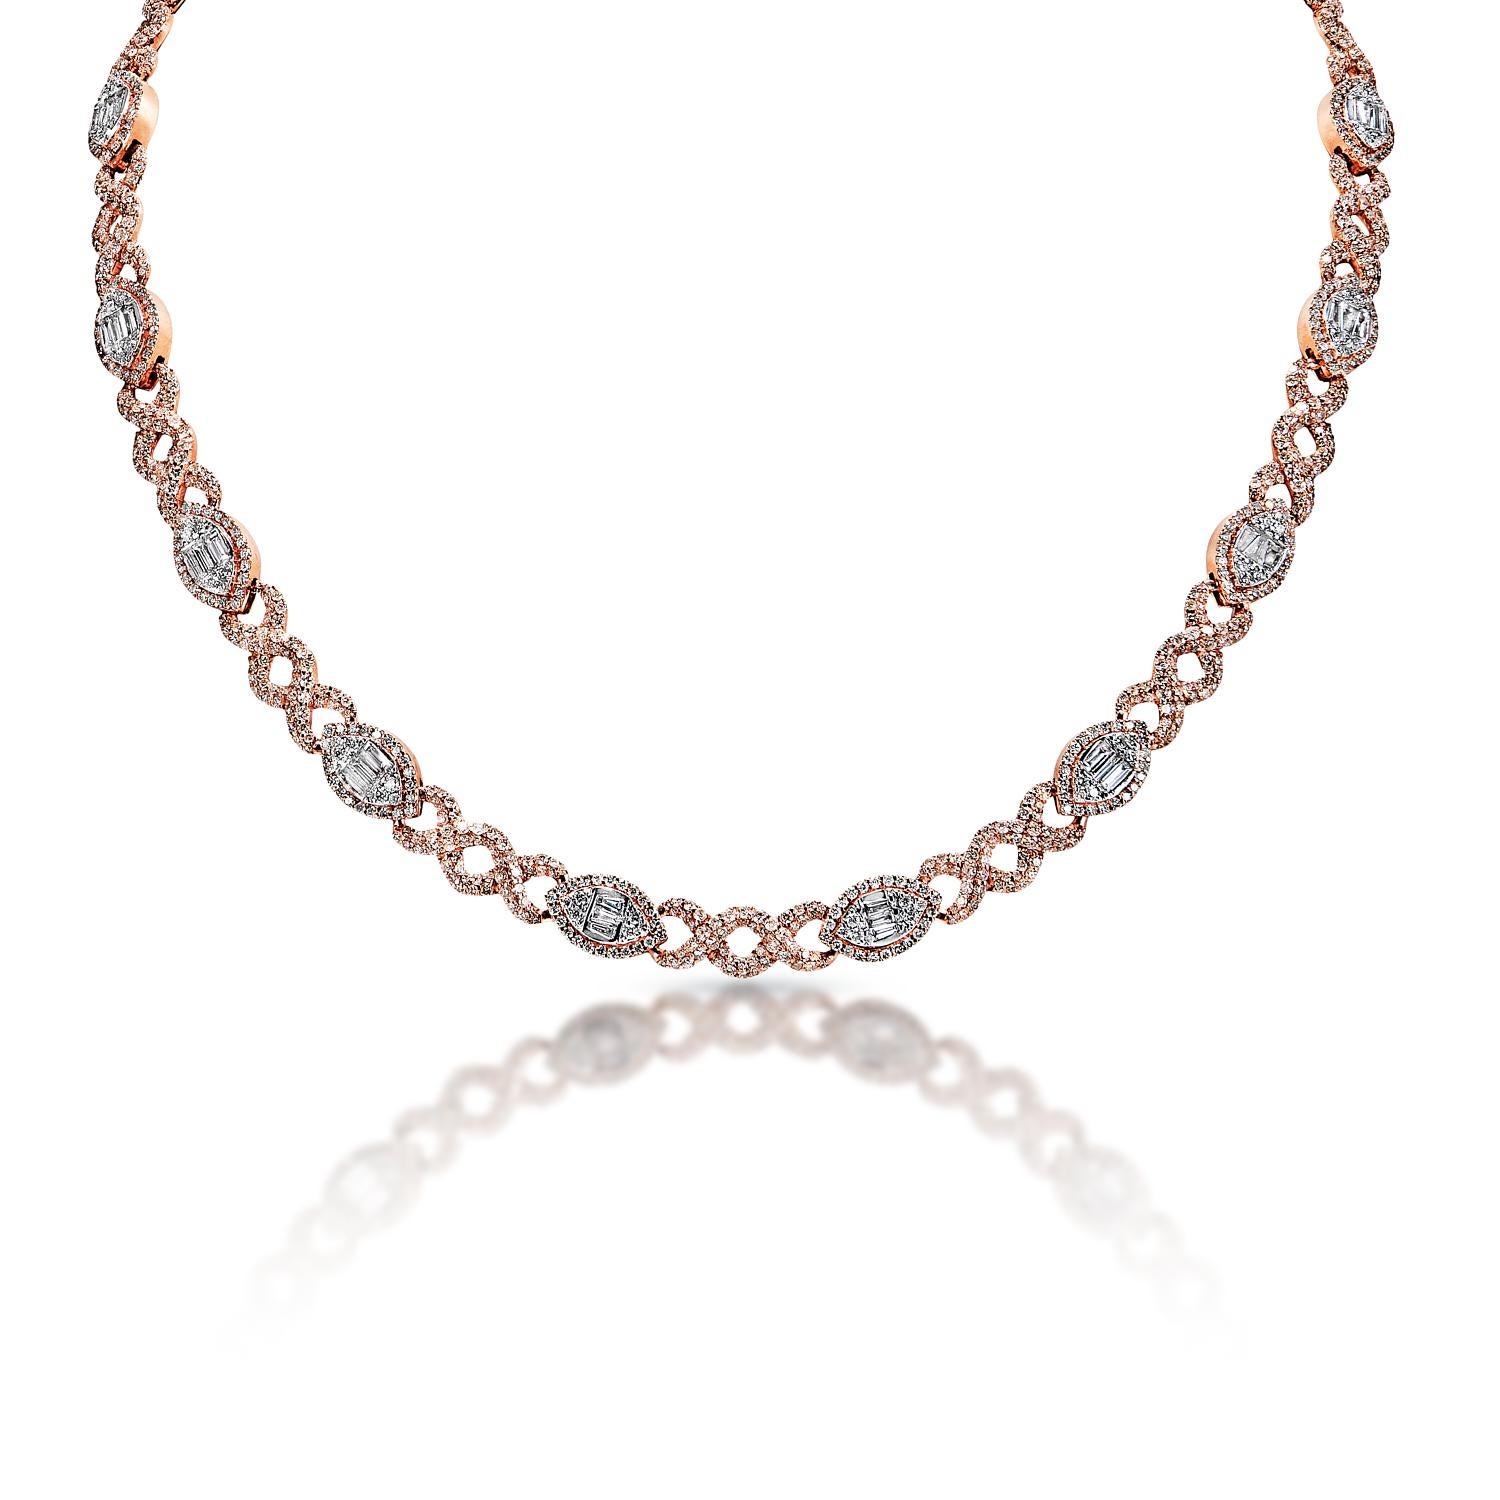 Diamond Necklace:

Carat Weight: 15.00 Carats
Style: Combine Mix Shape
Chains: 14 Karat Rose Gold